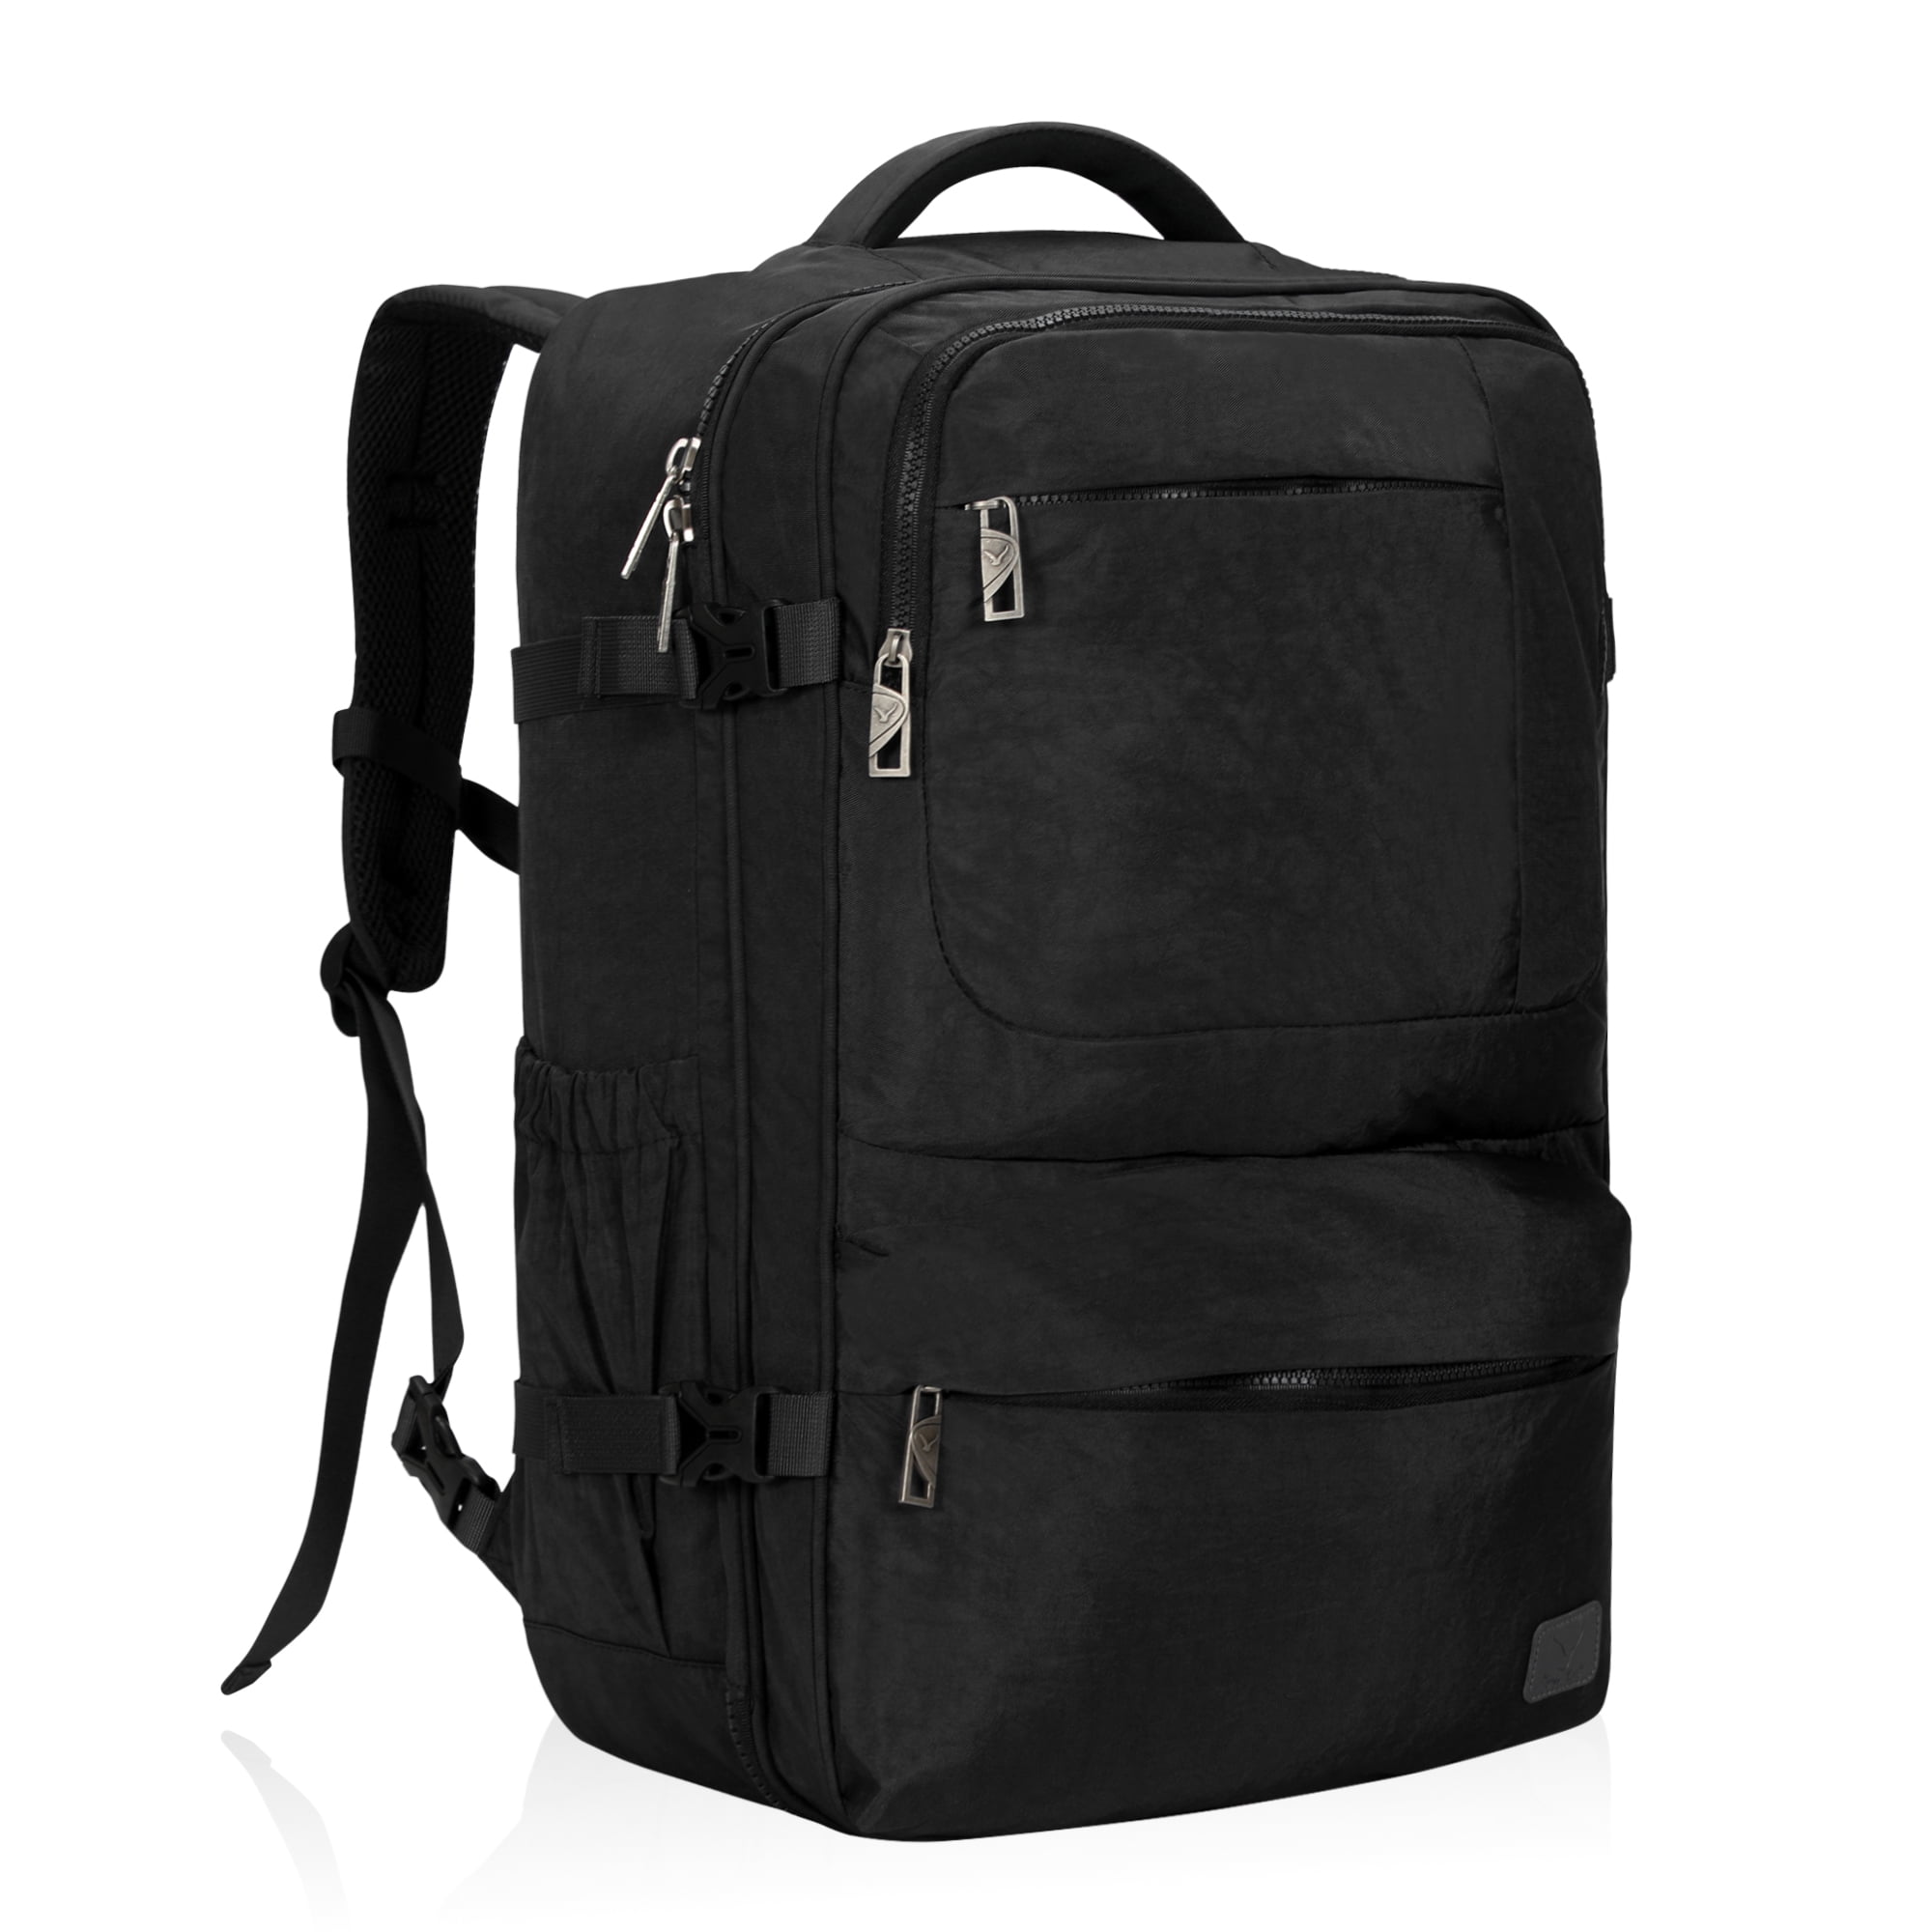 Hynes Eagle Business plus Carry on Luggage Ordinateur Portable Sac à dos valise 